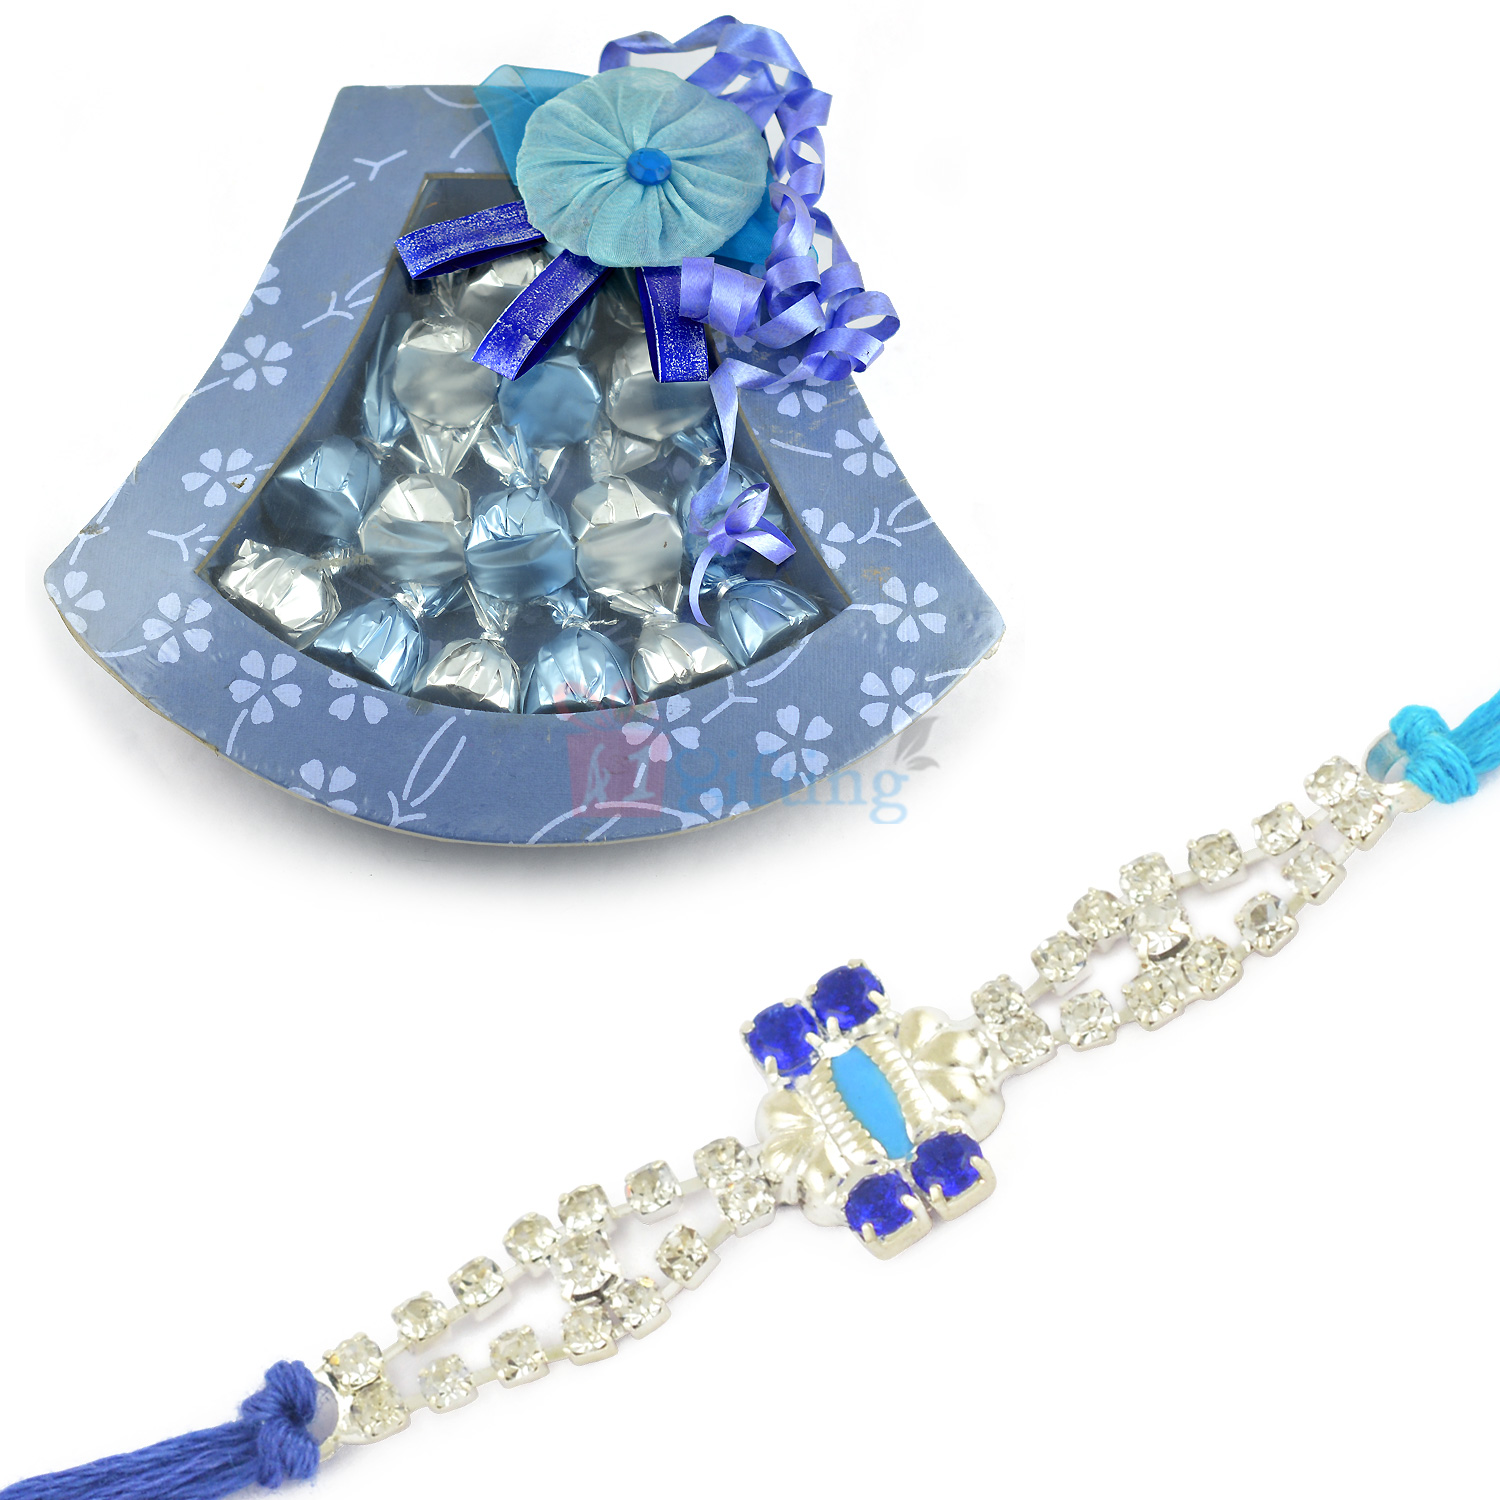 White and Blue Diamond Rakhi with Homemade Chocolate Box